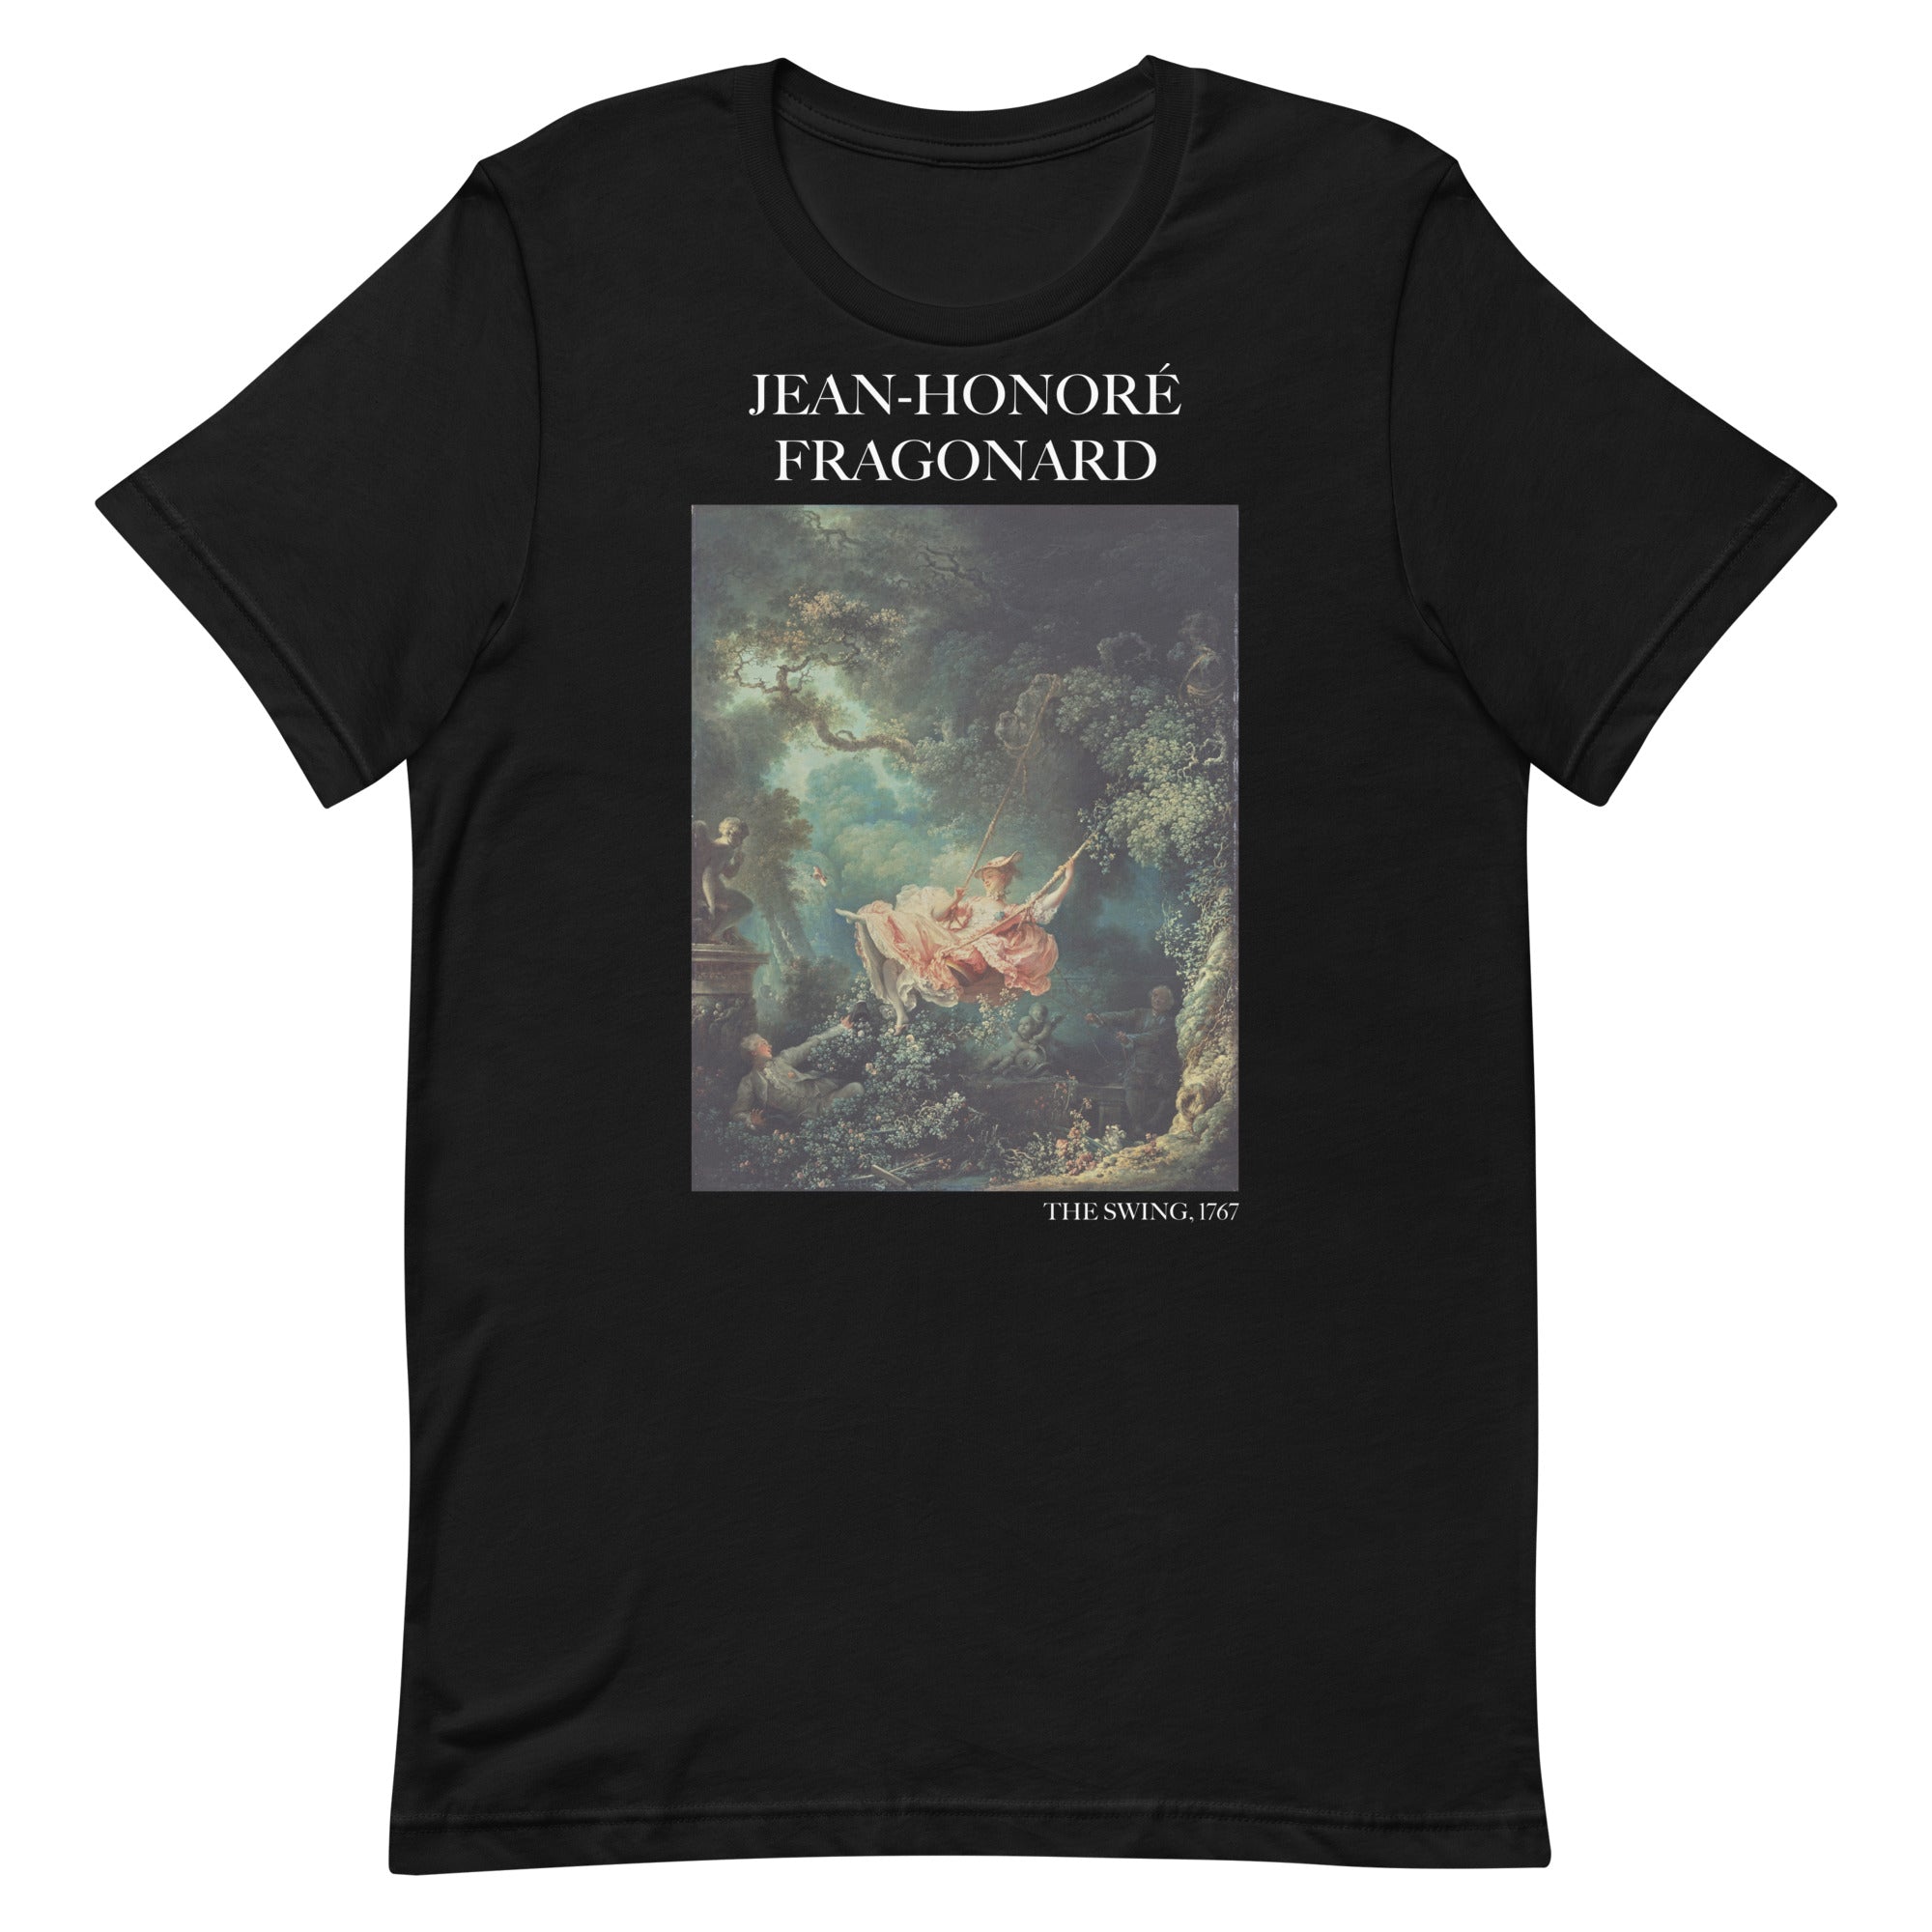 Jean-Honoré Fragonard 'The Swing' Famous Painting T-Shirt | Unisex Classic Art Tee